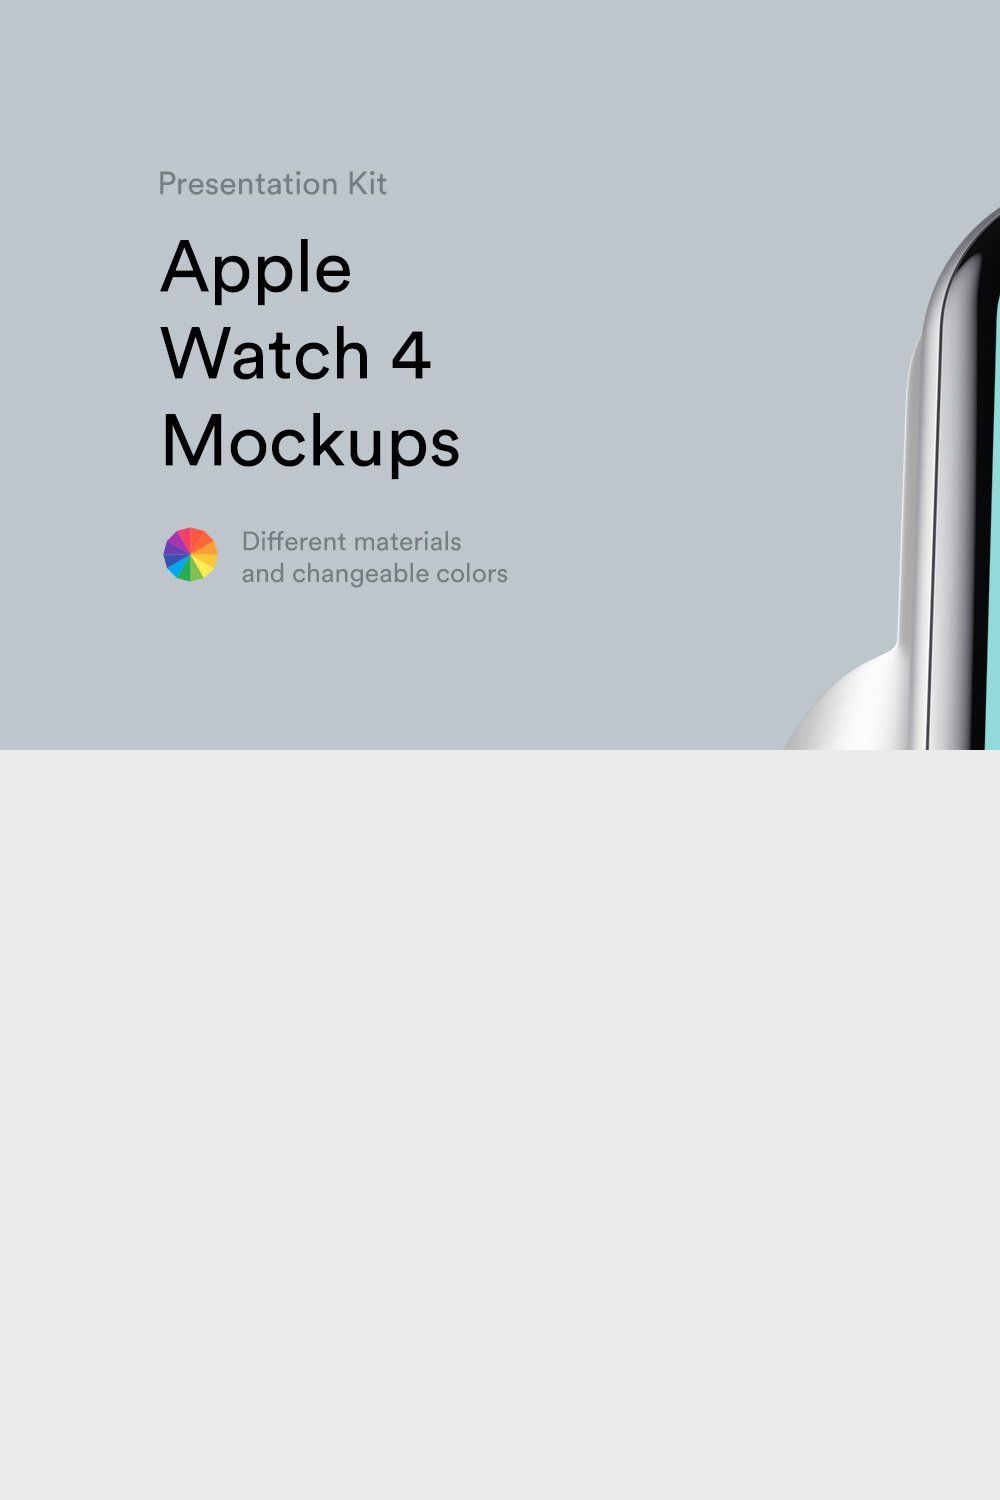 Apple Watch 4 Mockups | PK pinterest preview image.